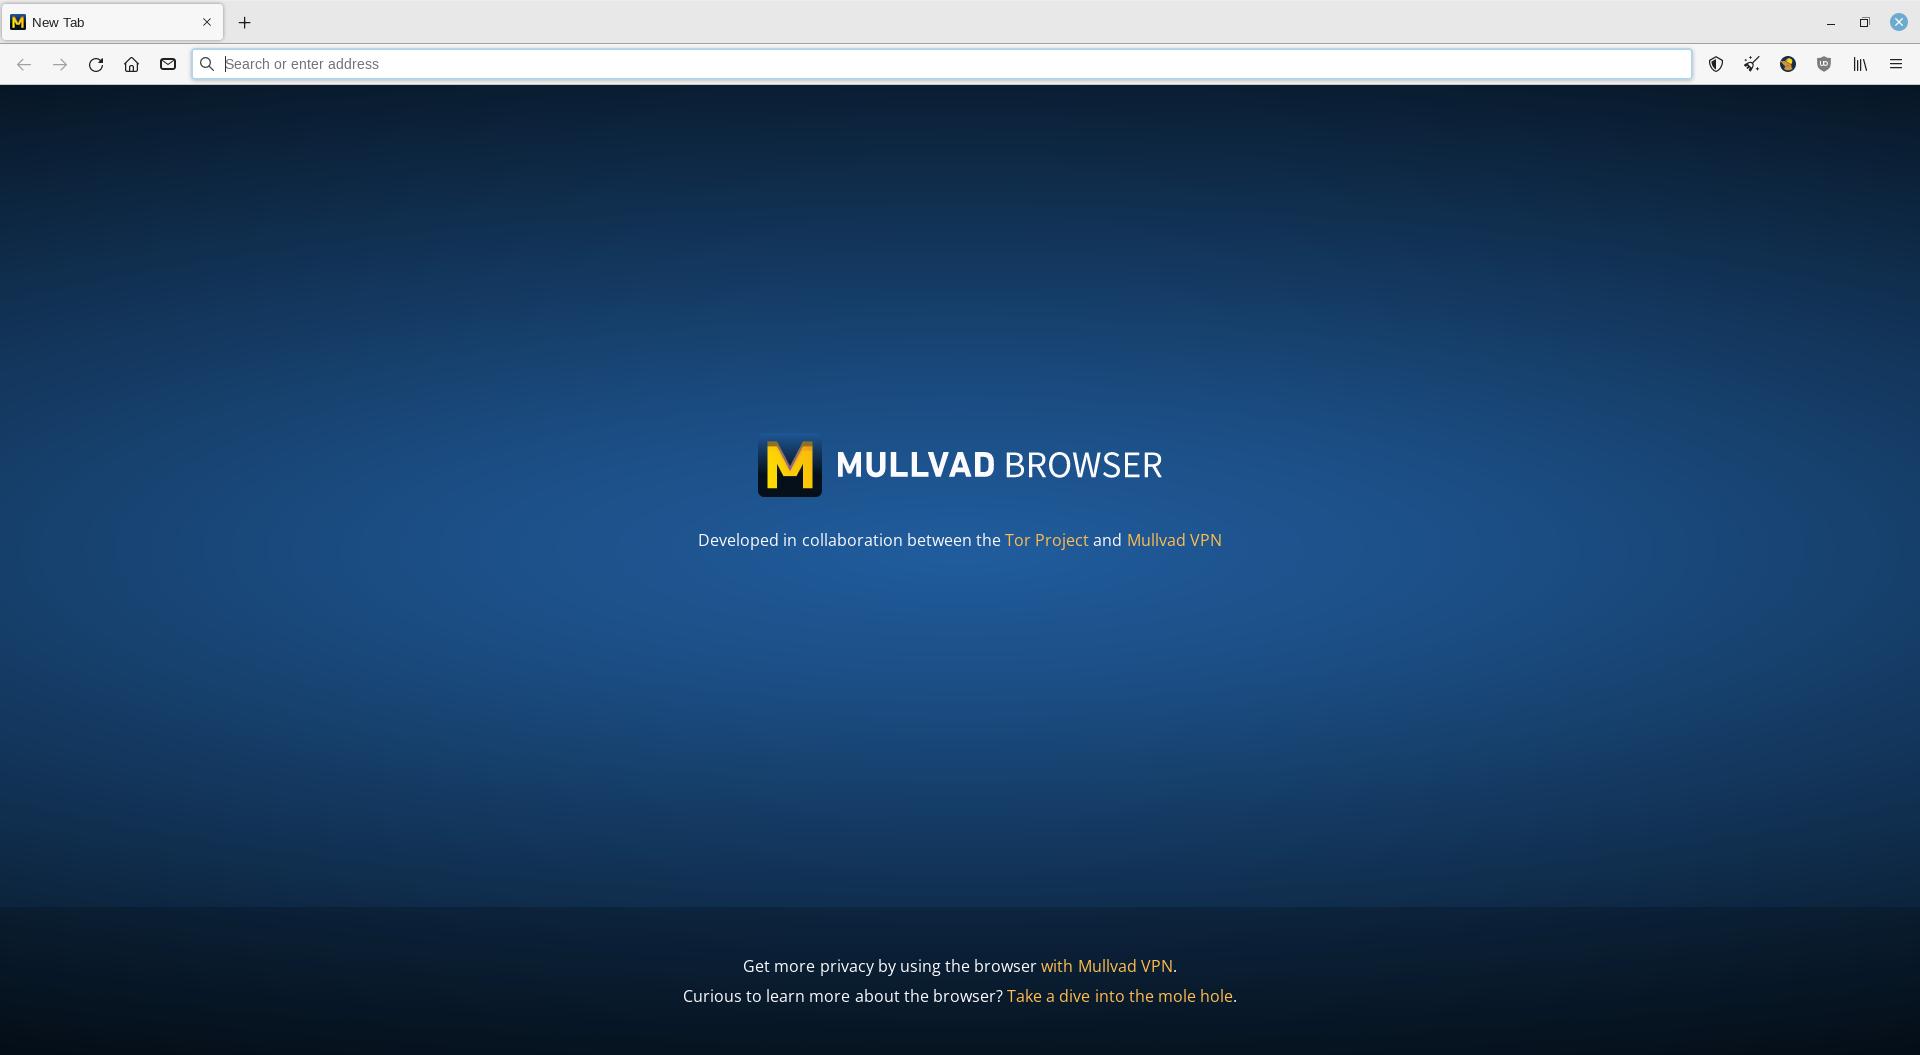 Mullvad Browser Splash Screen